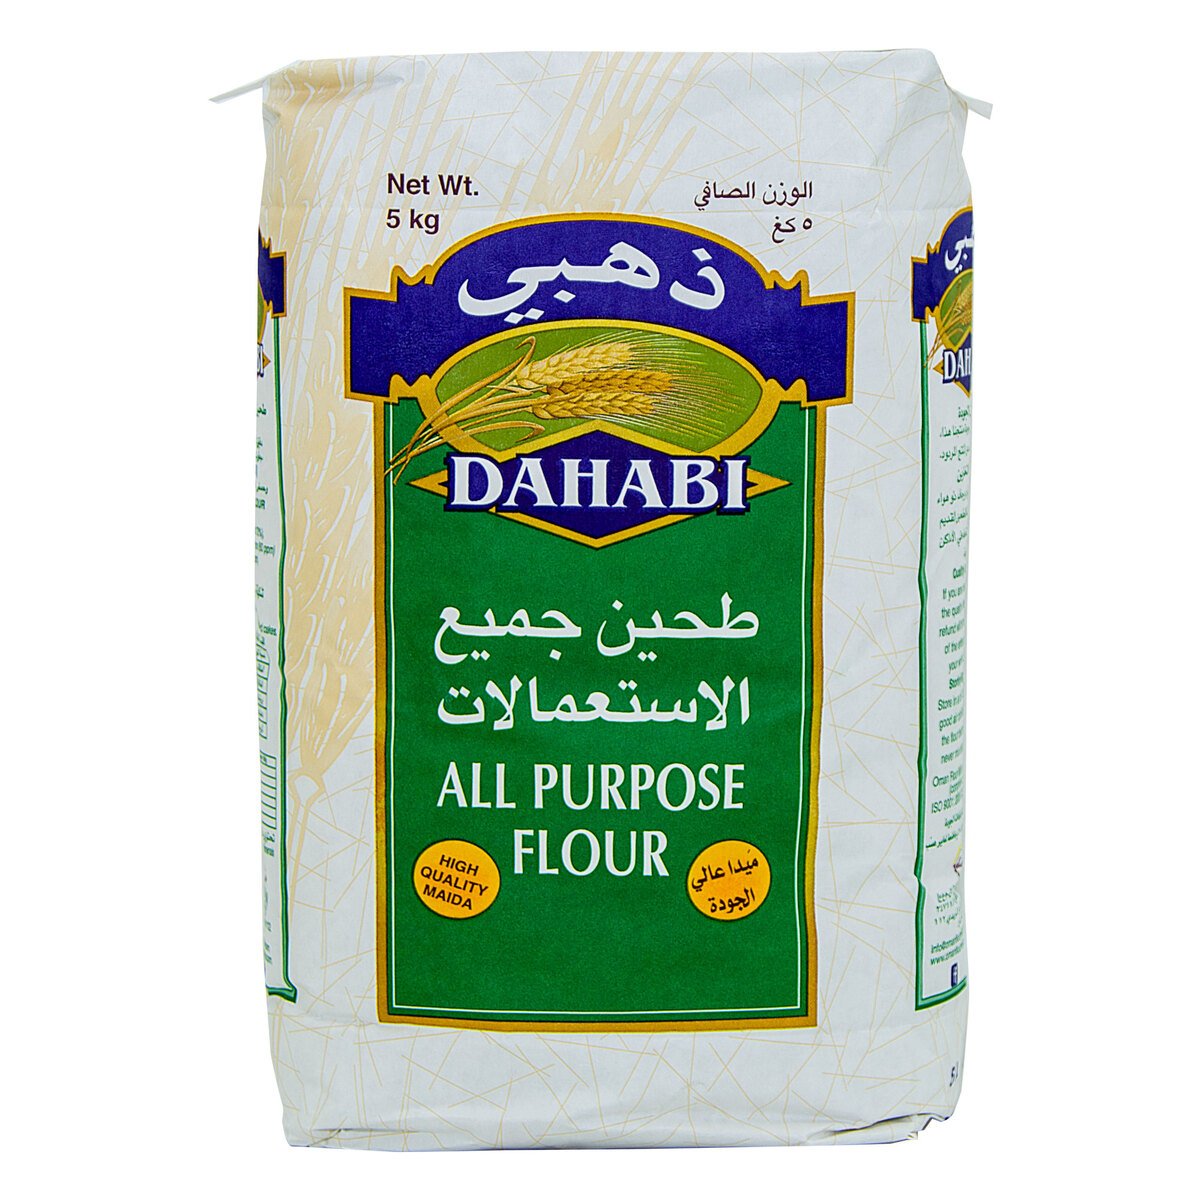 Dahabi All Purpose Flour 5kg